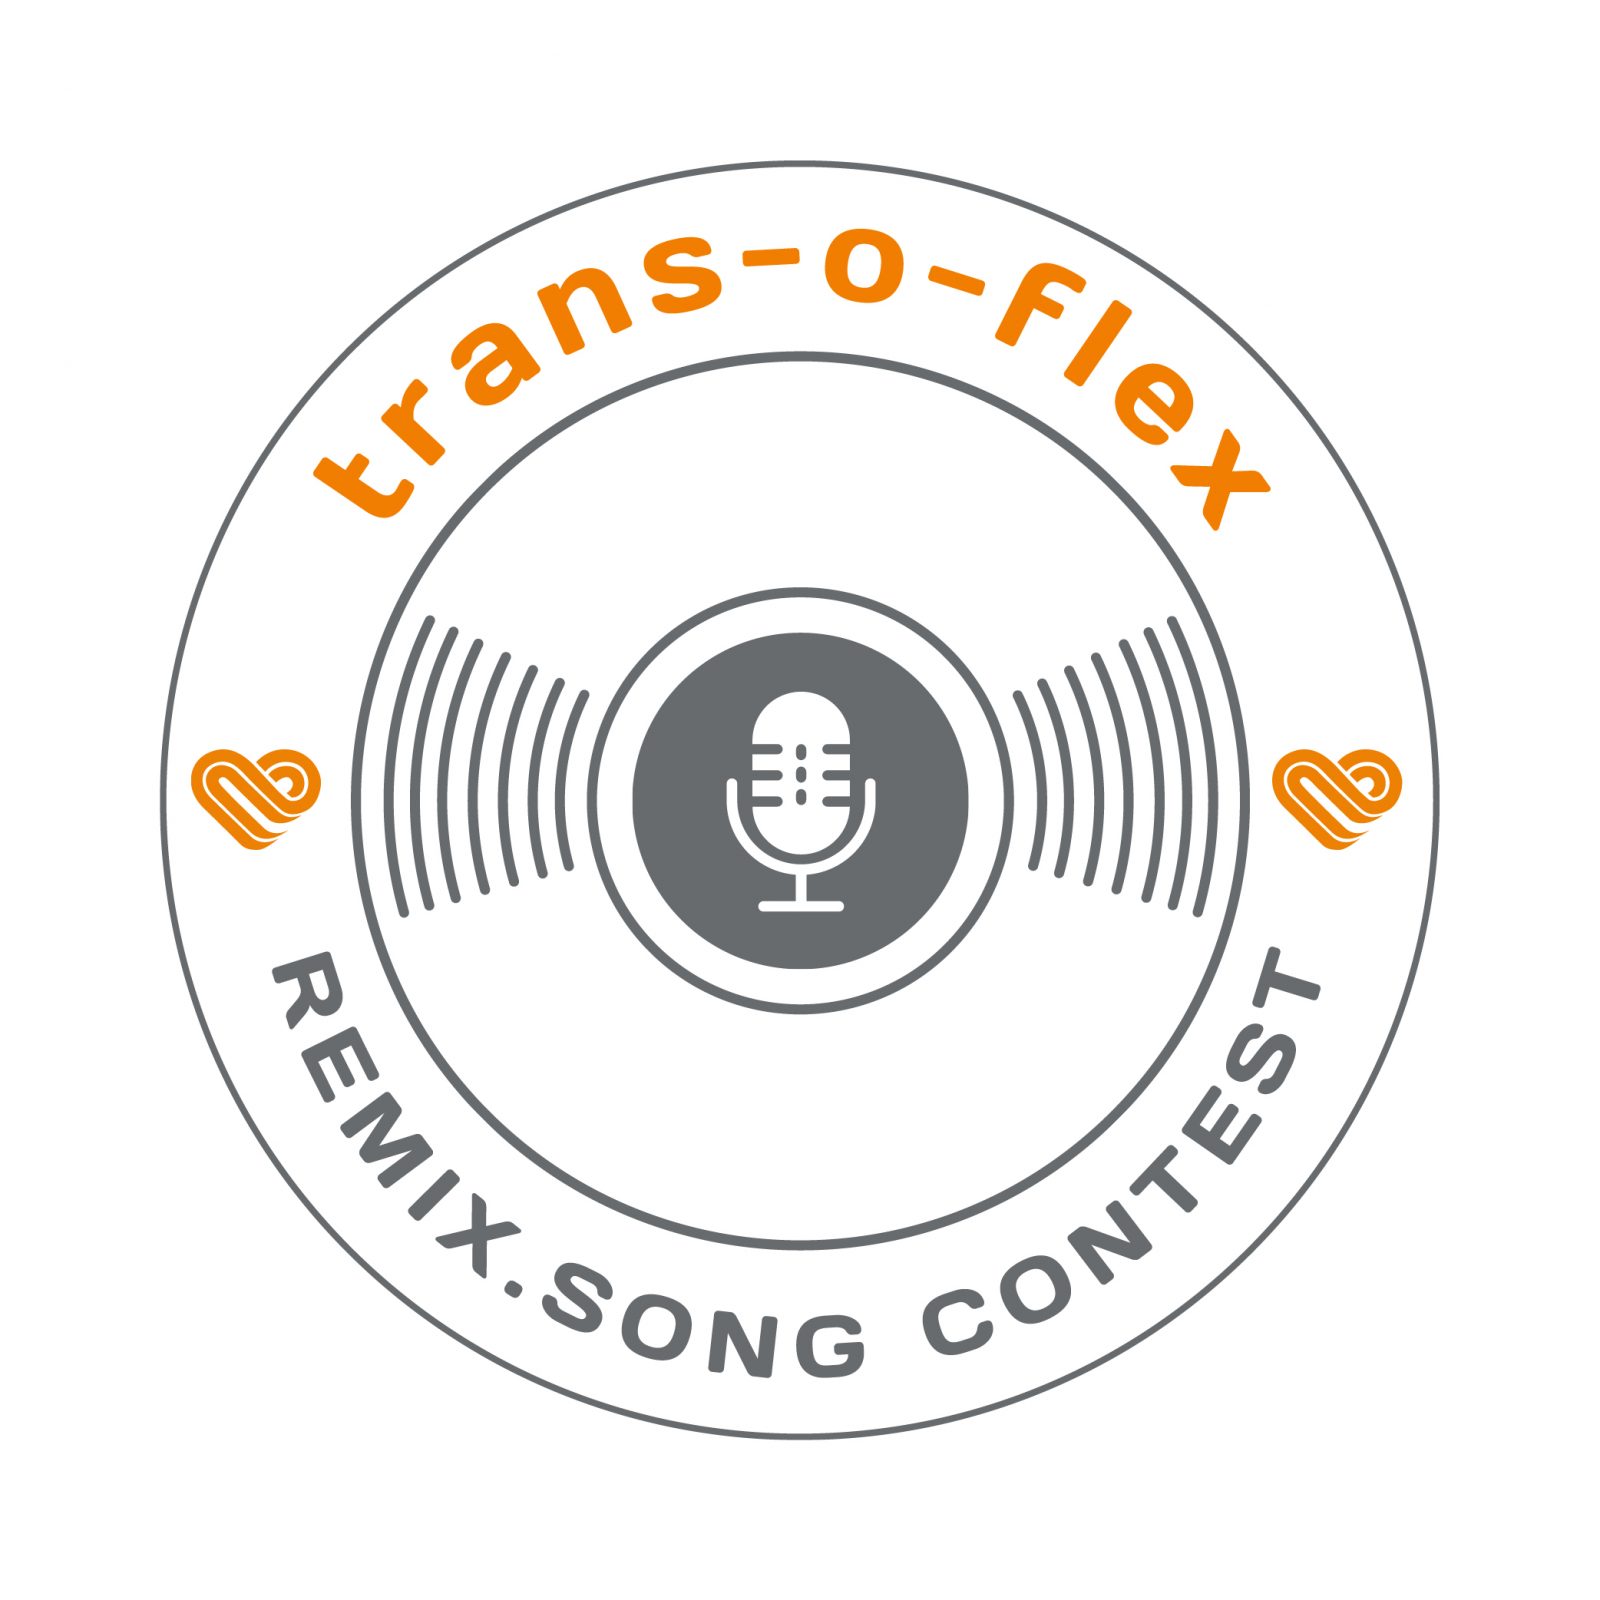 trans-o-flex SoundCloud contest